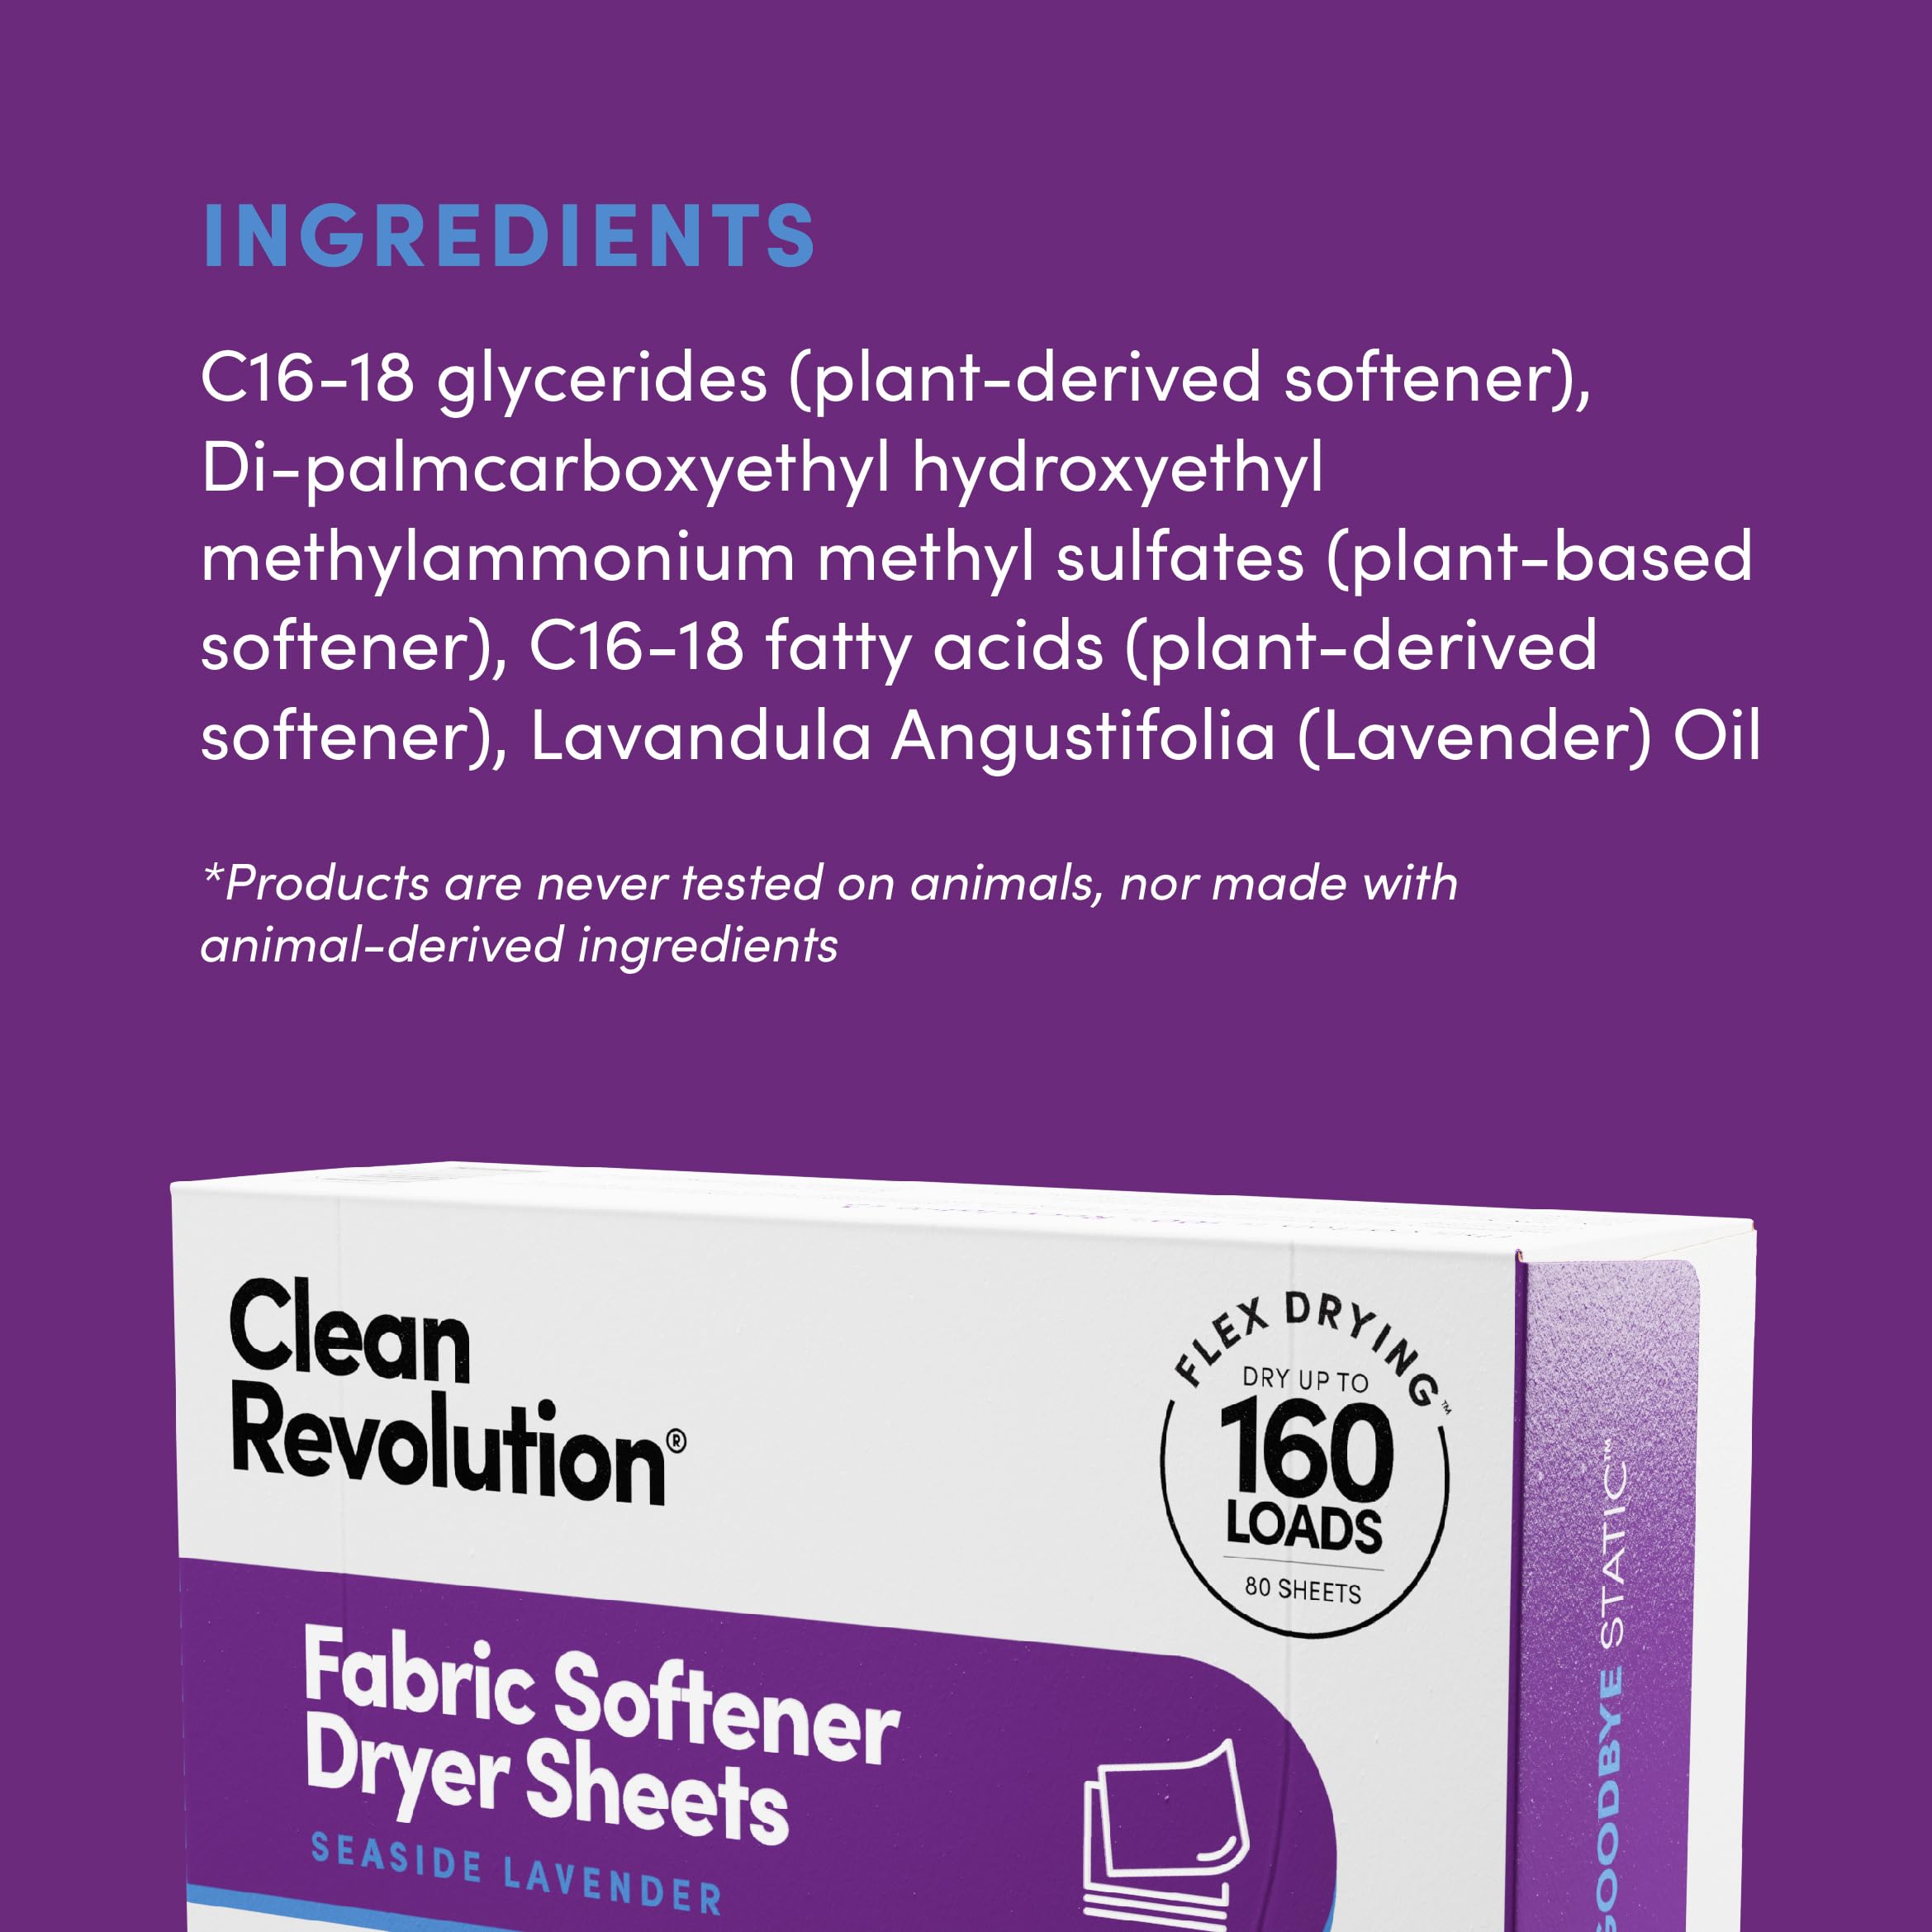 Clean Revolution Fabric Softener Dryer Sheets, 80 Sheets, 160 Loads, Seaside Lavender, Naturally Derived, Sensitive Skin Safe, Made in the USA